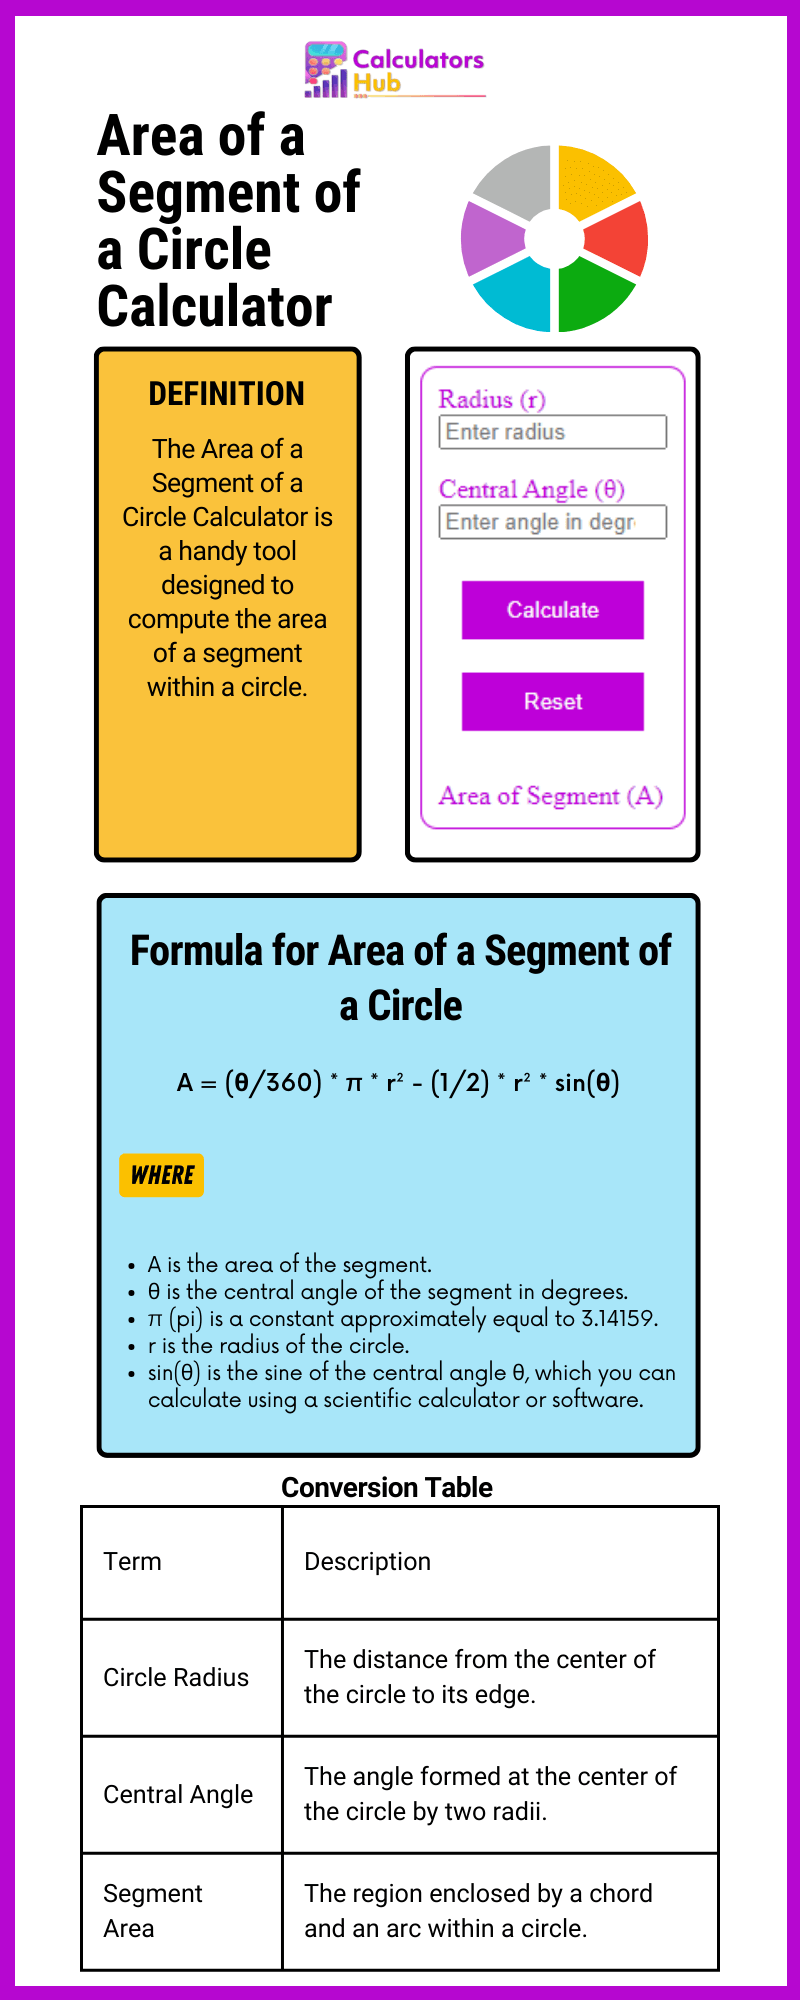 Area of a Segment of a Circle Calculator